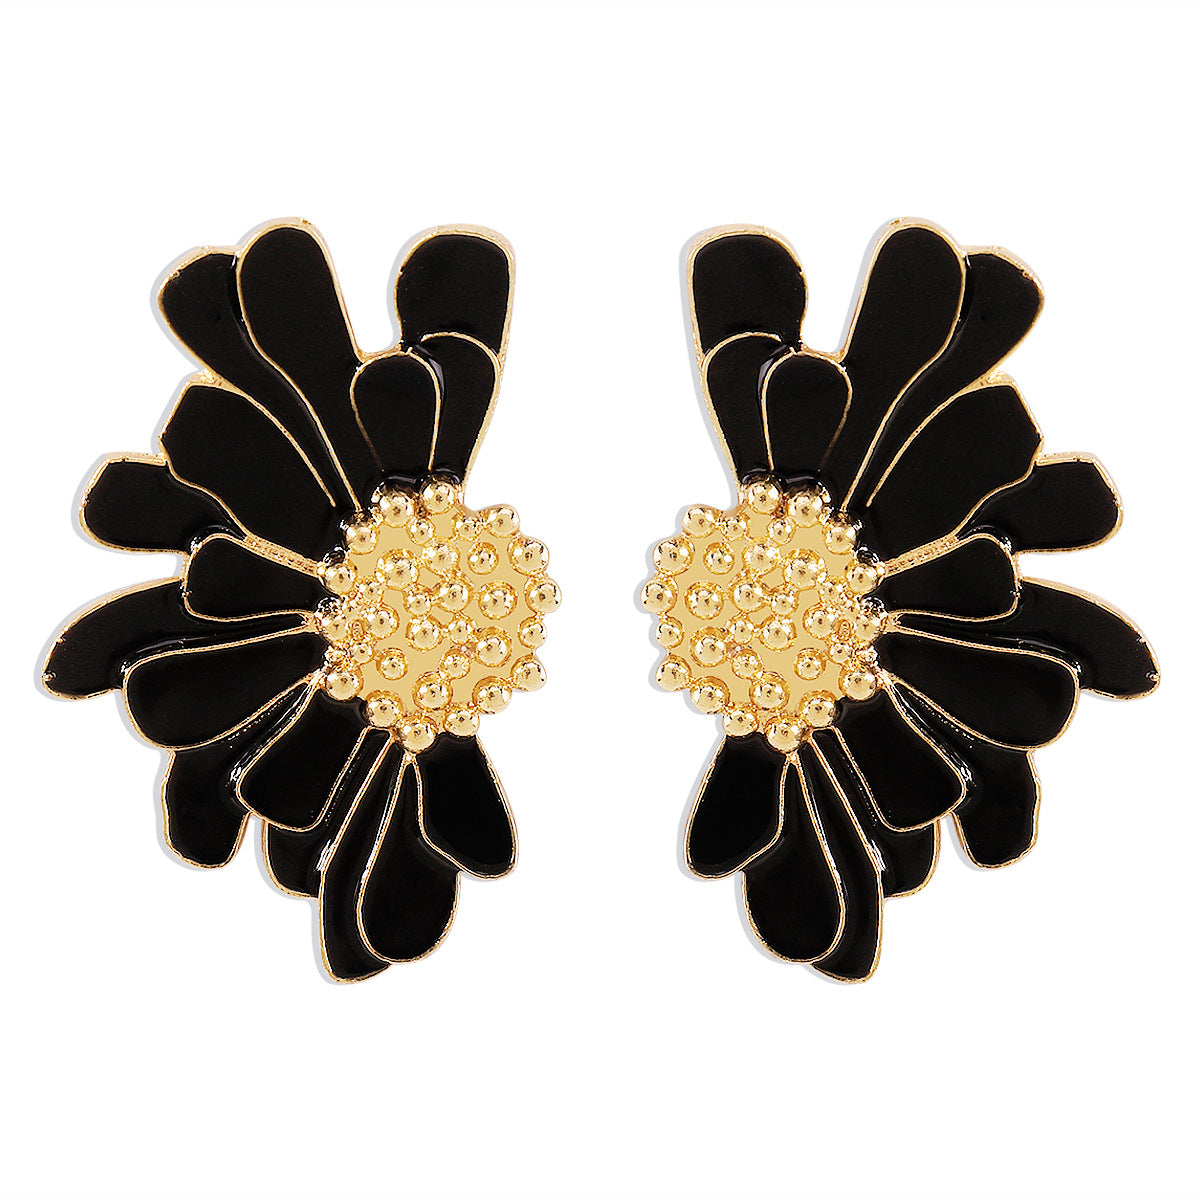 Black Enamel & 18K Gold-Plated Mum Stud Earrings